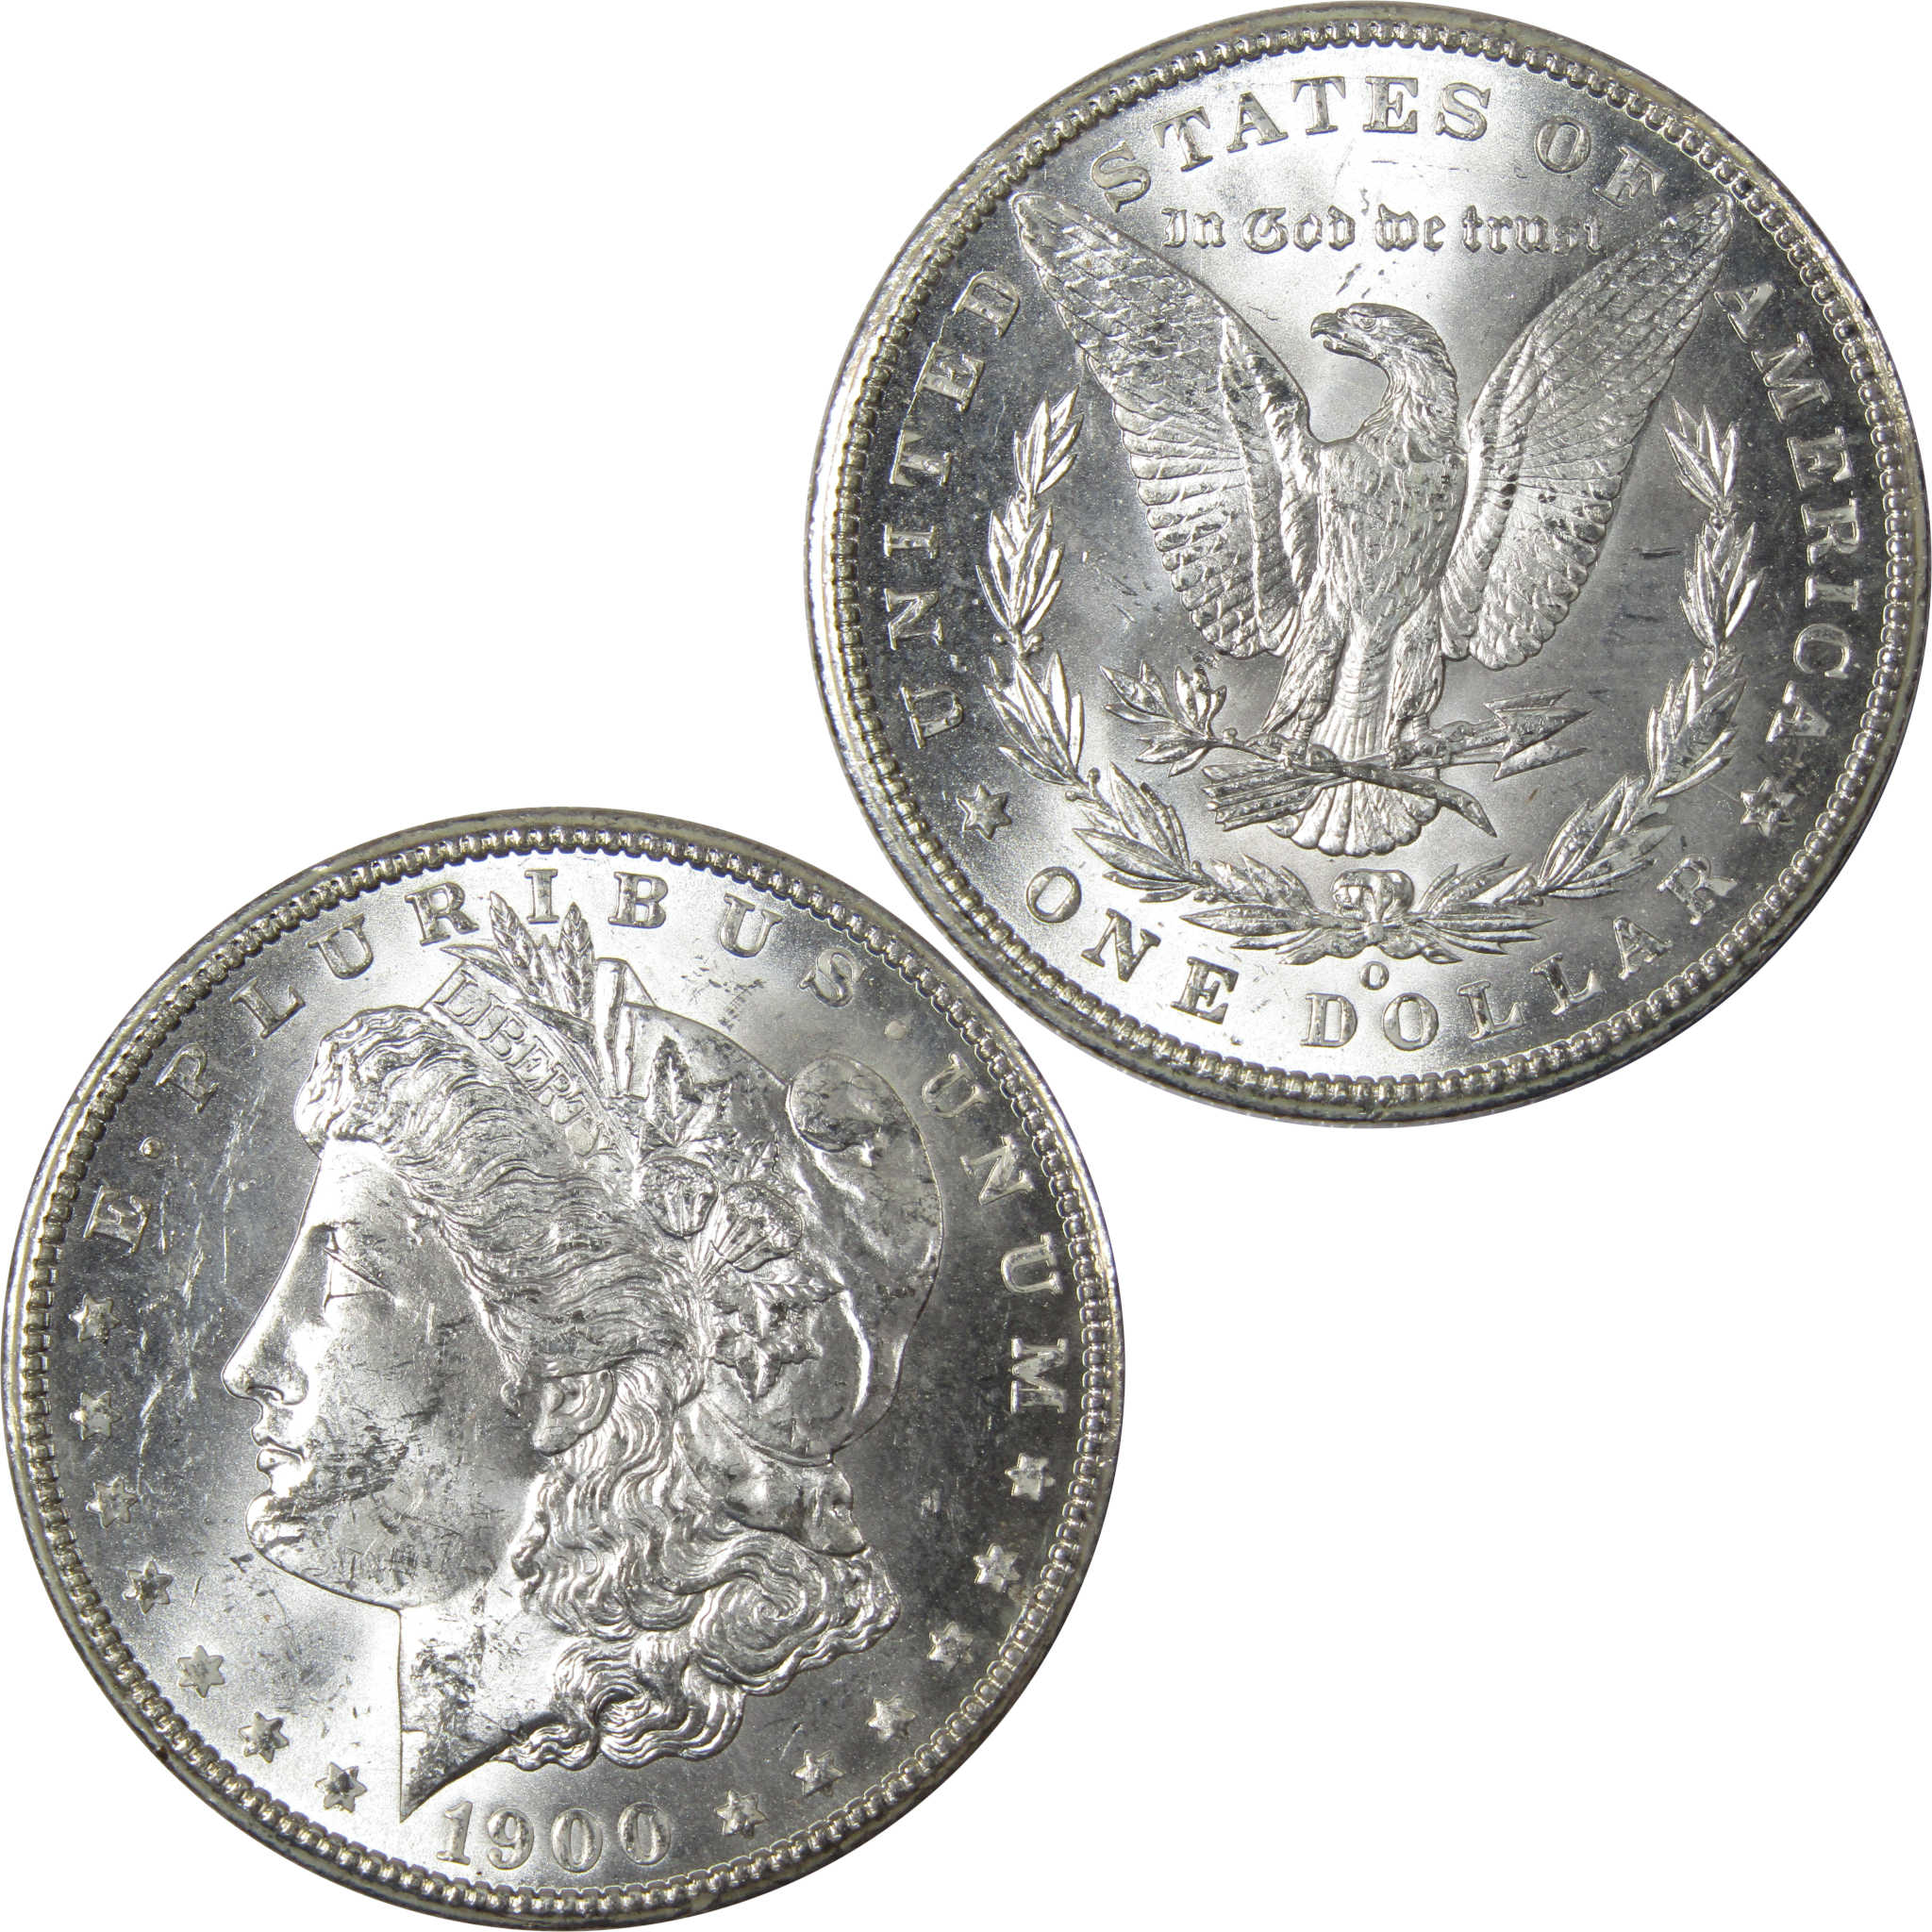 1900 O Morgan Dollar BU Uncirculated Mint State 90% Silver SKU:IPC9732 - Morgan coin - Morgan silver dollar - Morgan silver dollar for sale - Profile Coins &amp; Collectibles